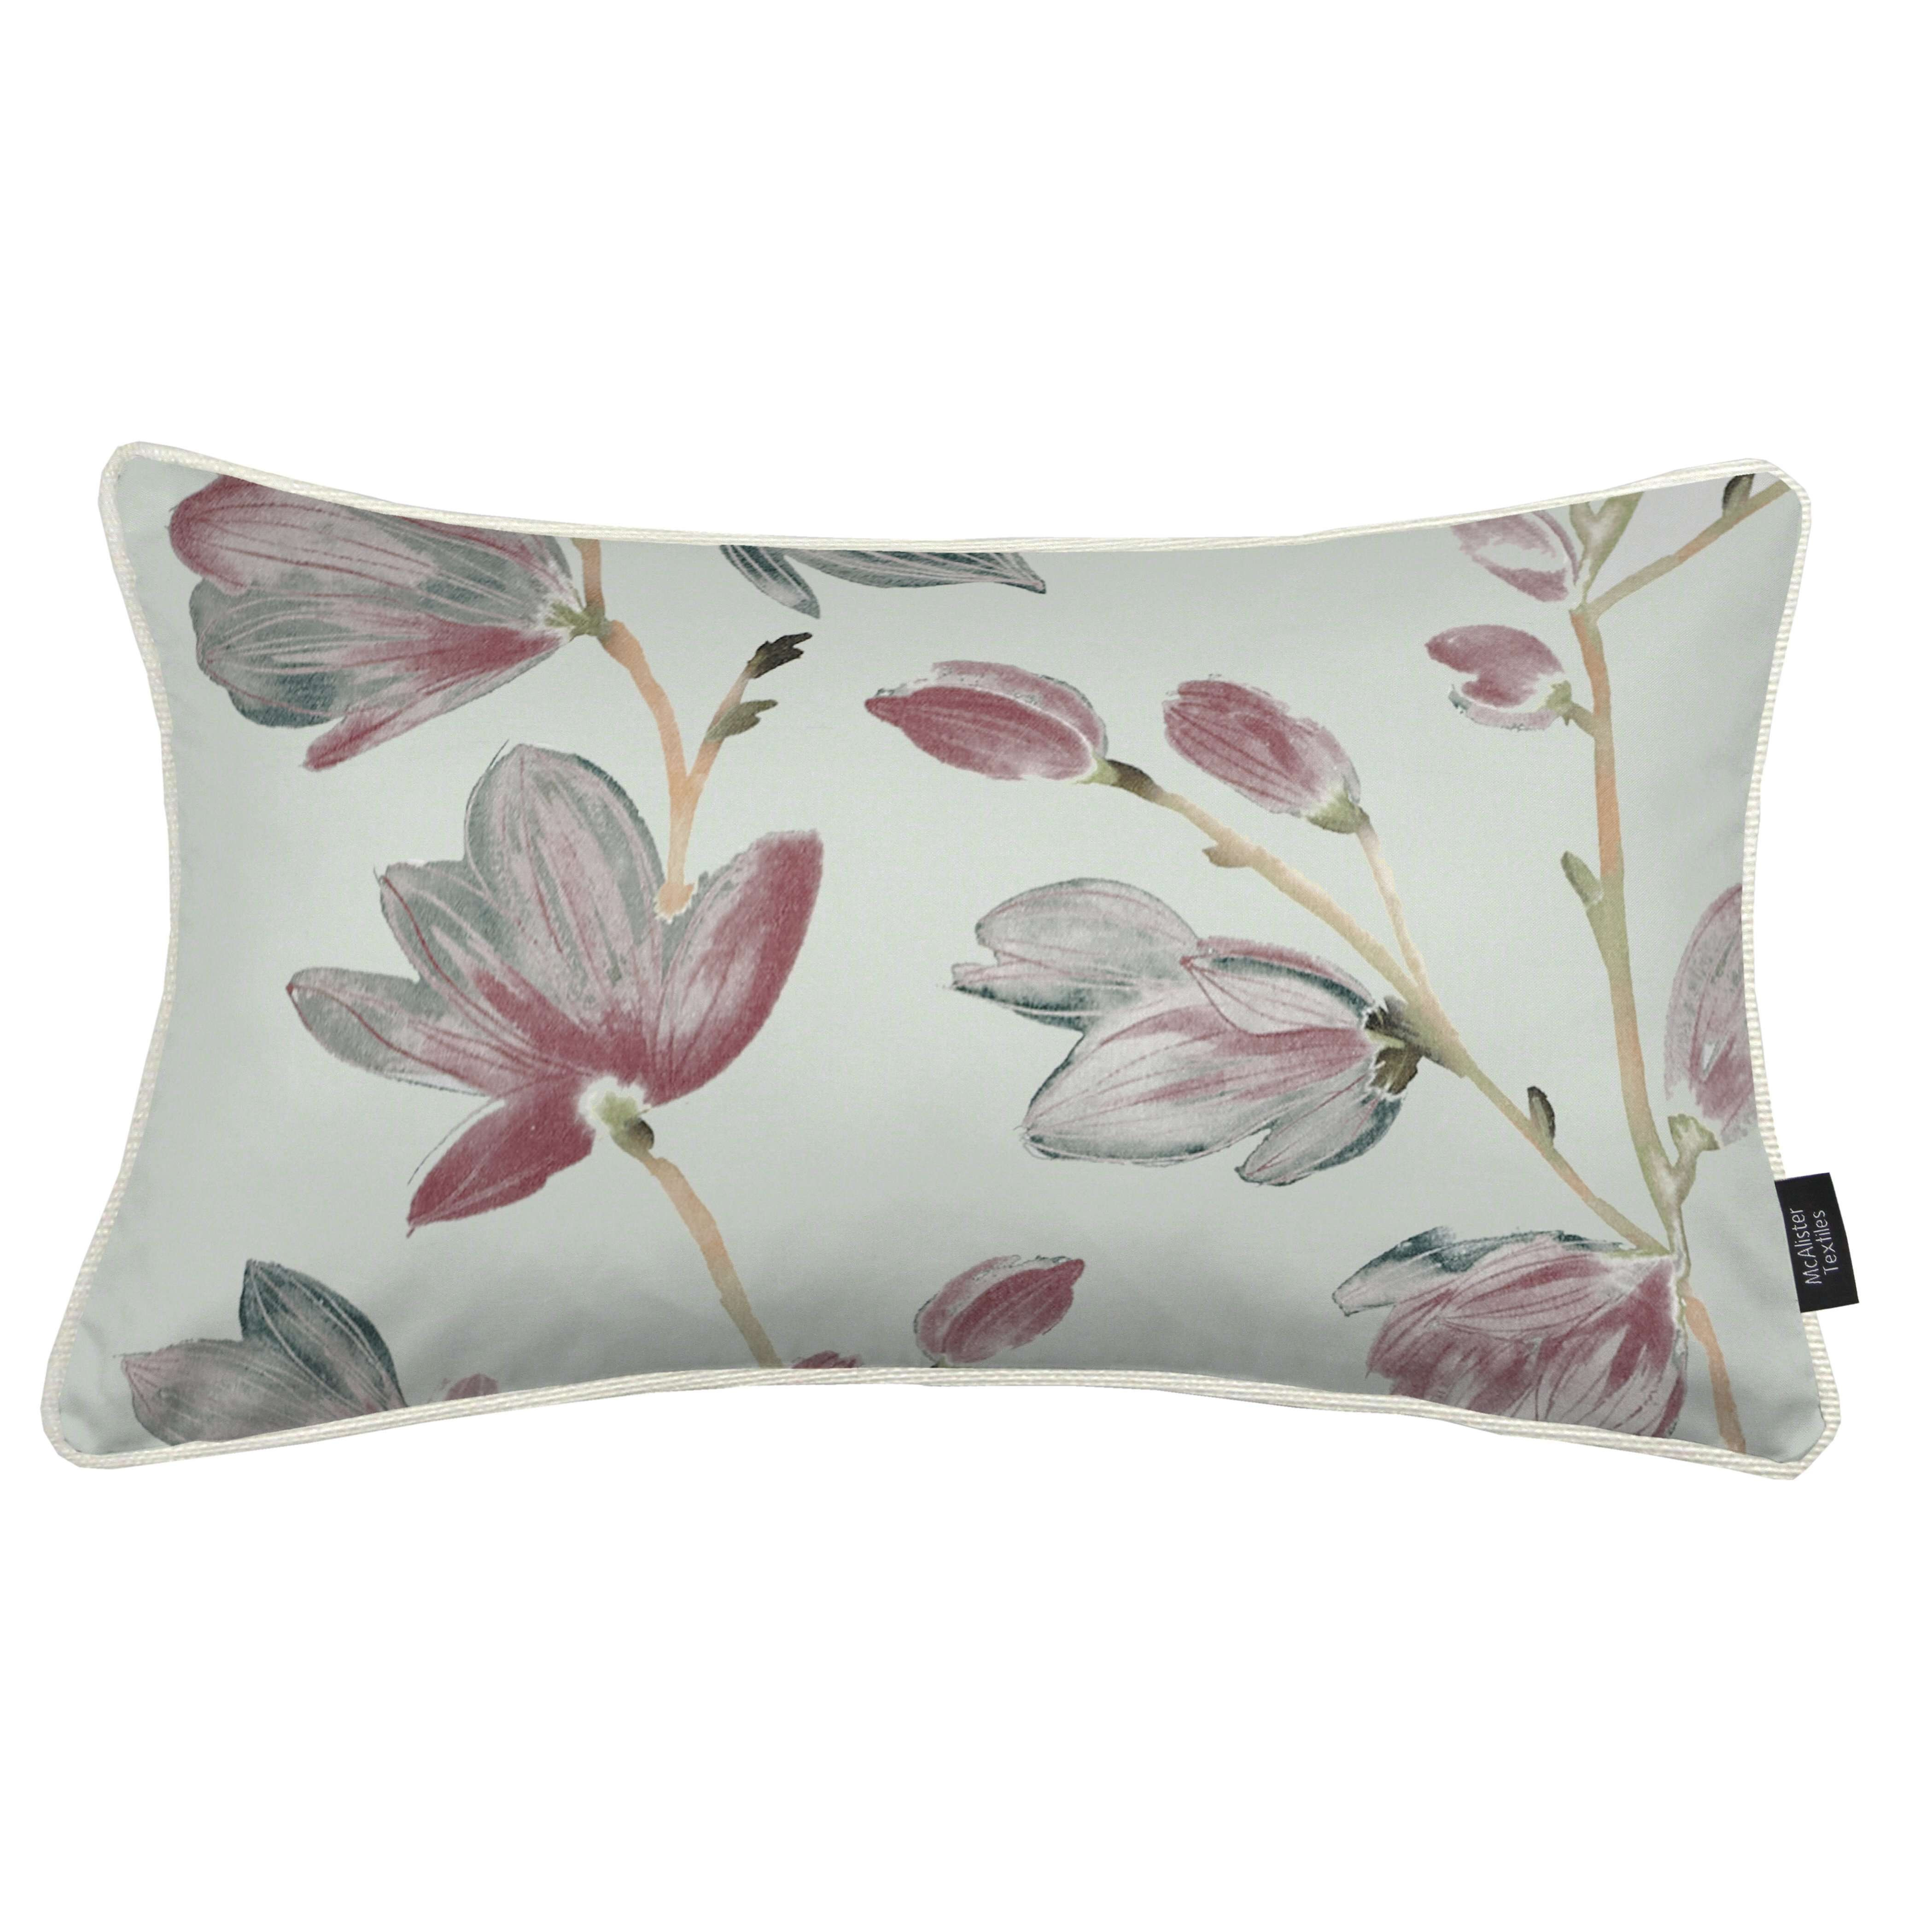 Magnolia Rose Floral Cotton Print Cushions, Cover Only / 50cm x 30cm